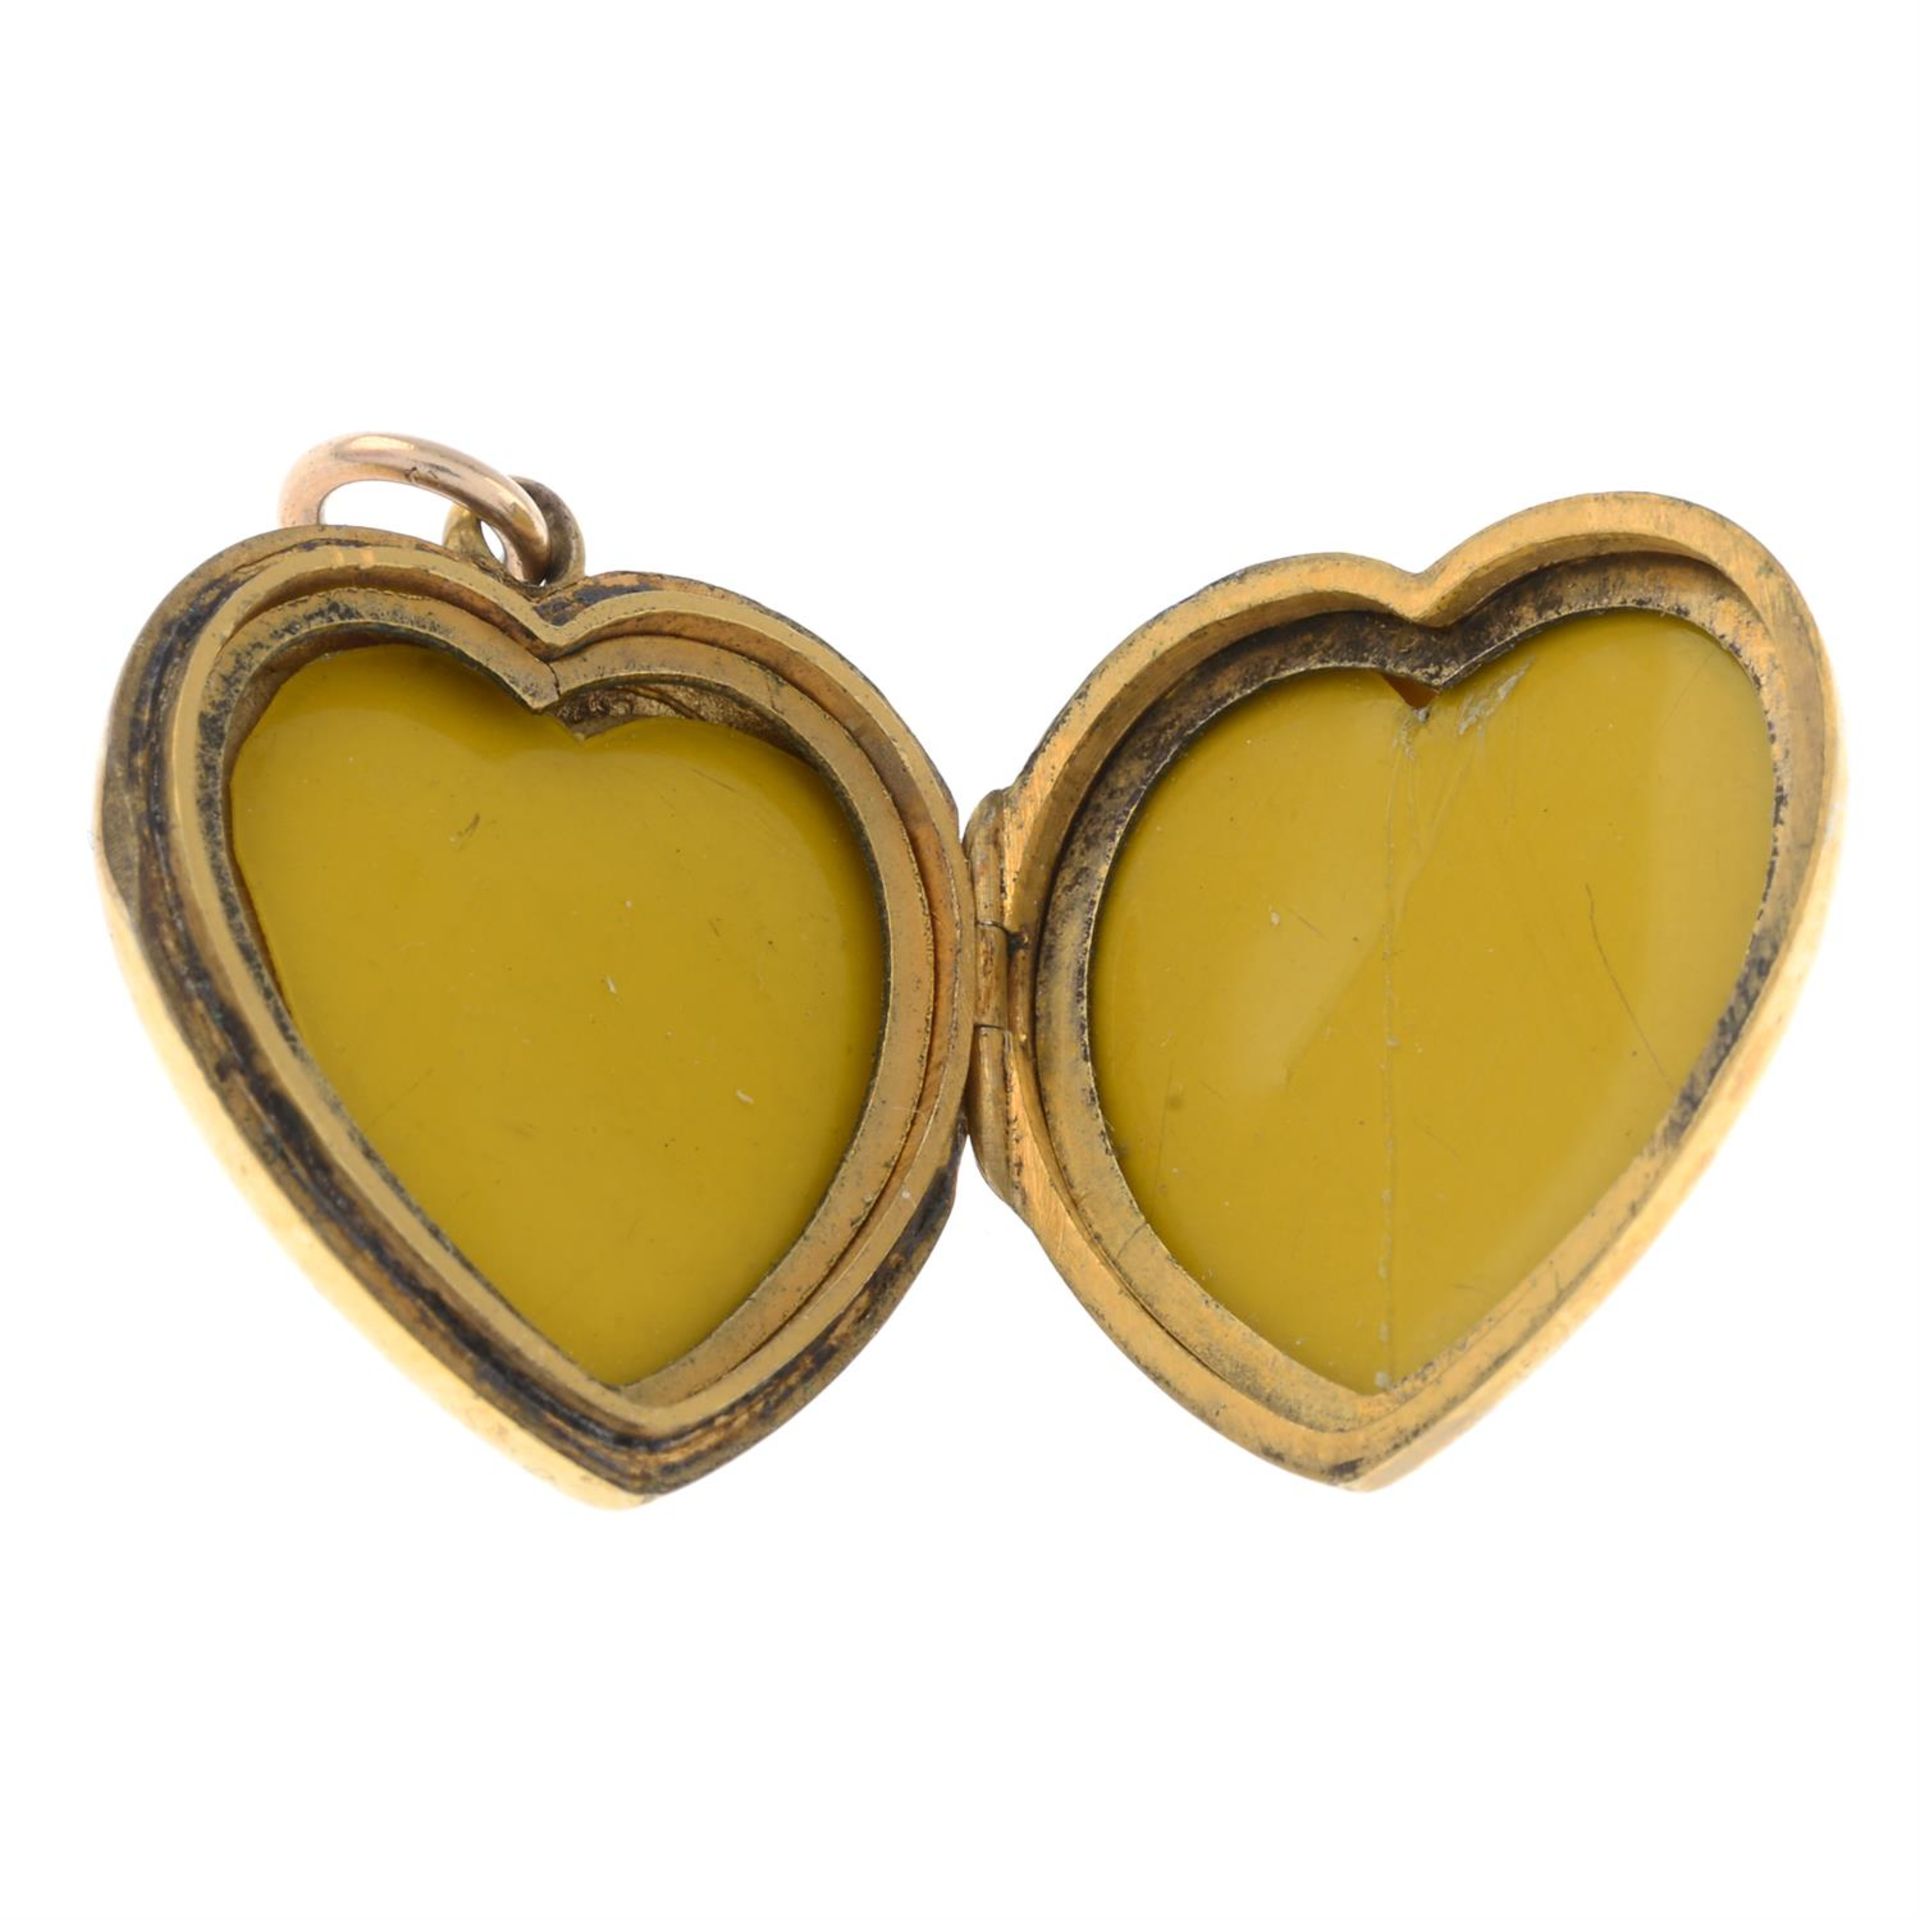 Victorian gem-set heart locket pendant - Image 3 of 3